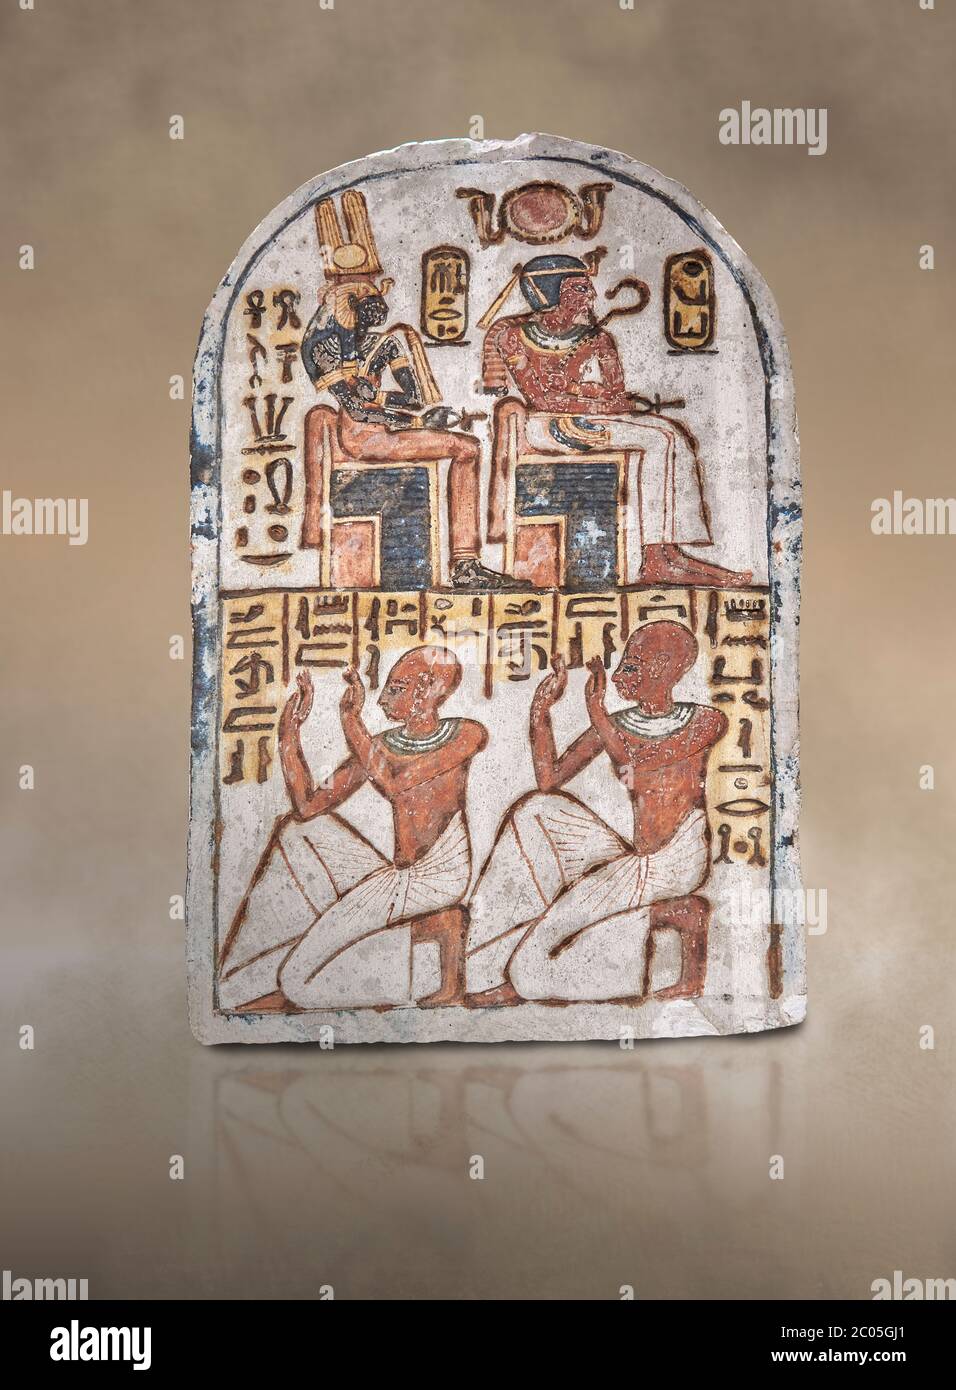 Antica stele egizia di Amenemope dedicata ad Amenhotep i e Ahmose-Nefertari, calcare, nuovo Regno, XIX dinastia, (1279-1213 a.C.), Deir el-Medin Foto Stock